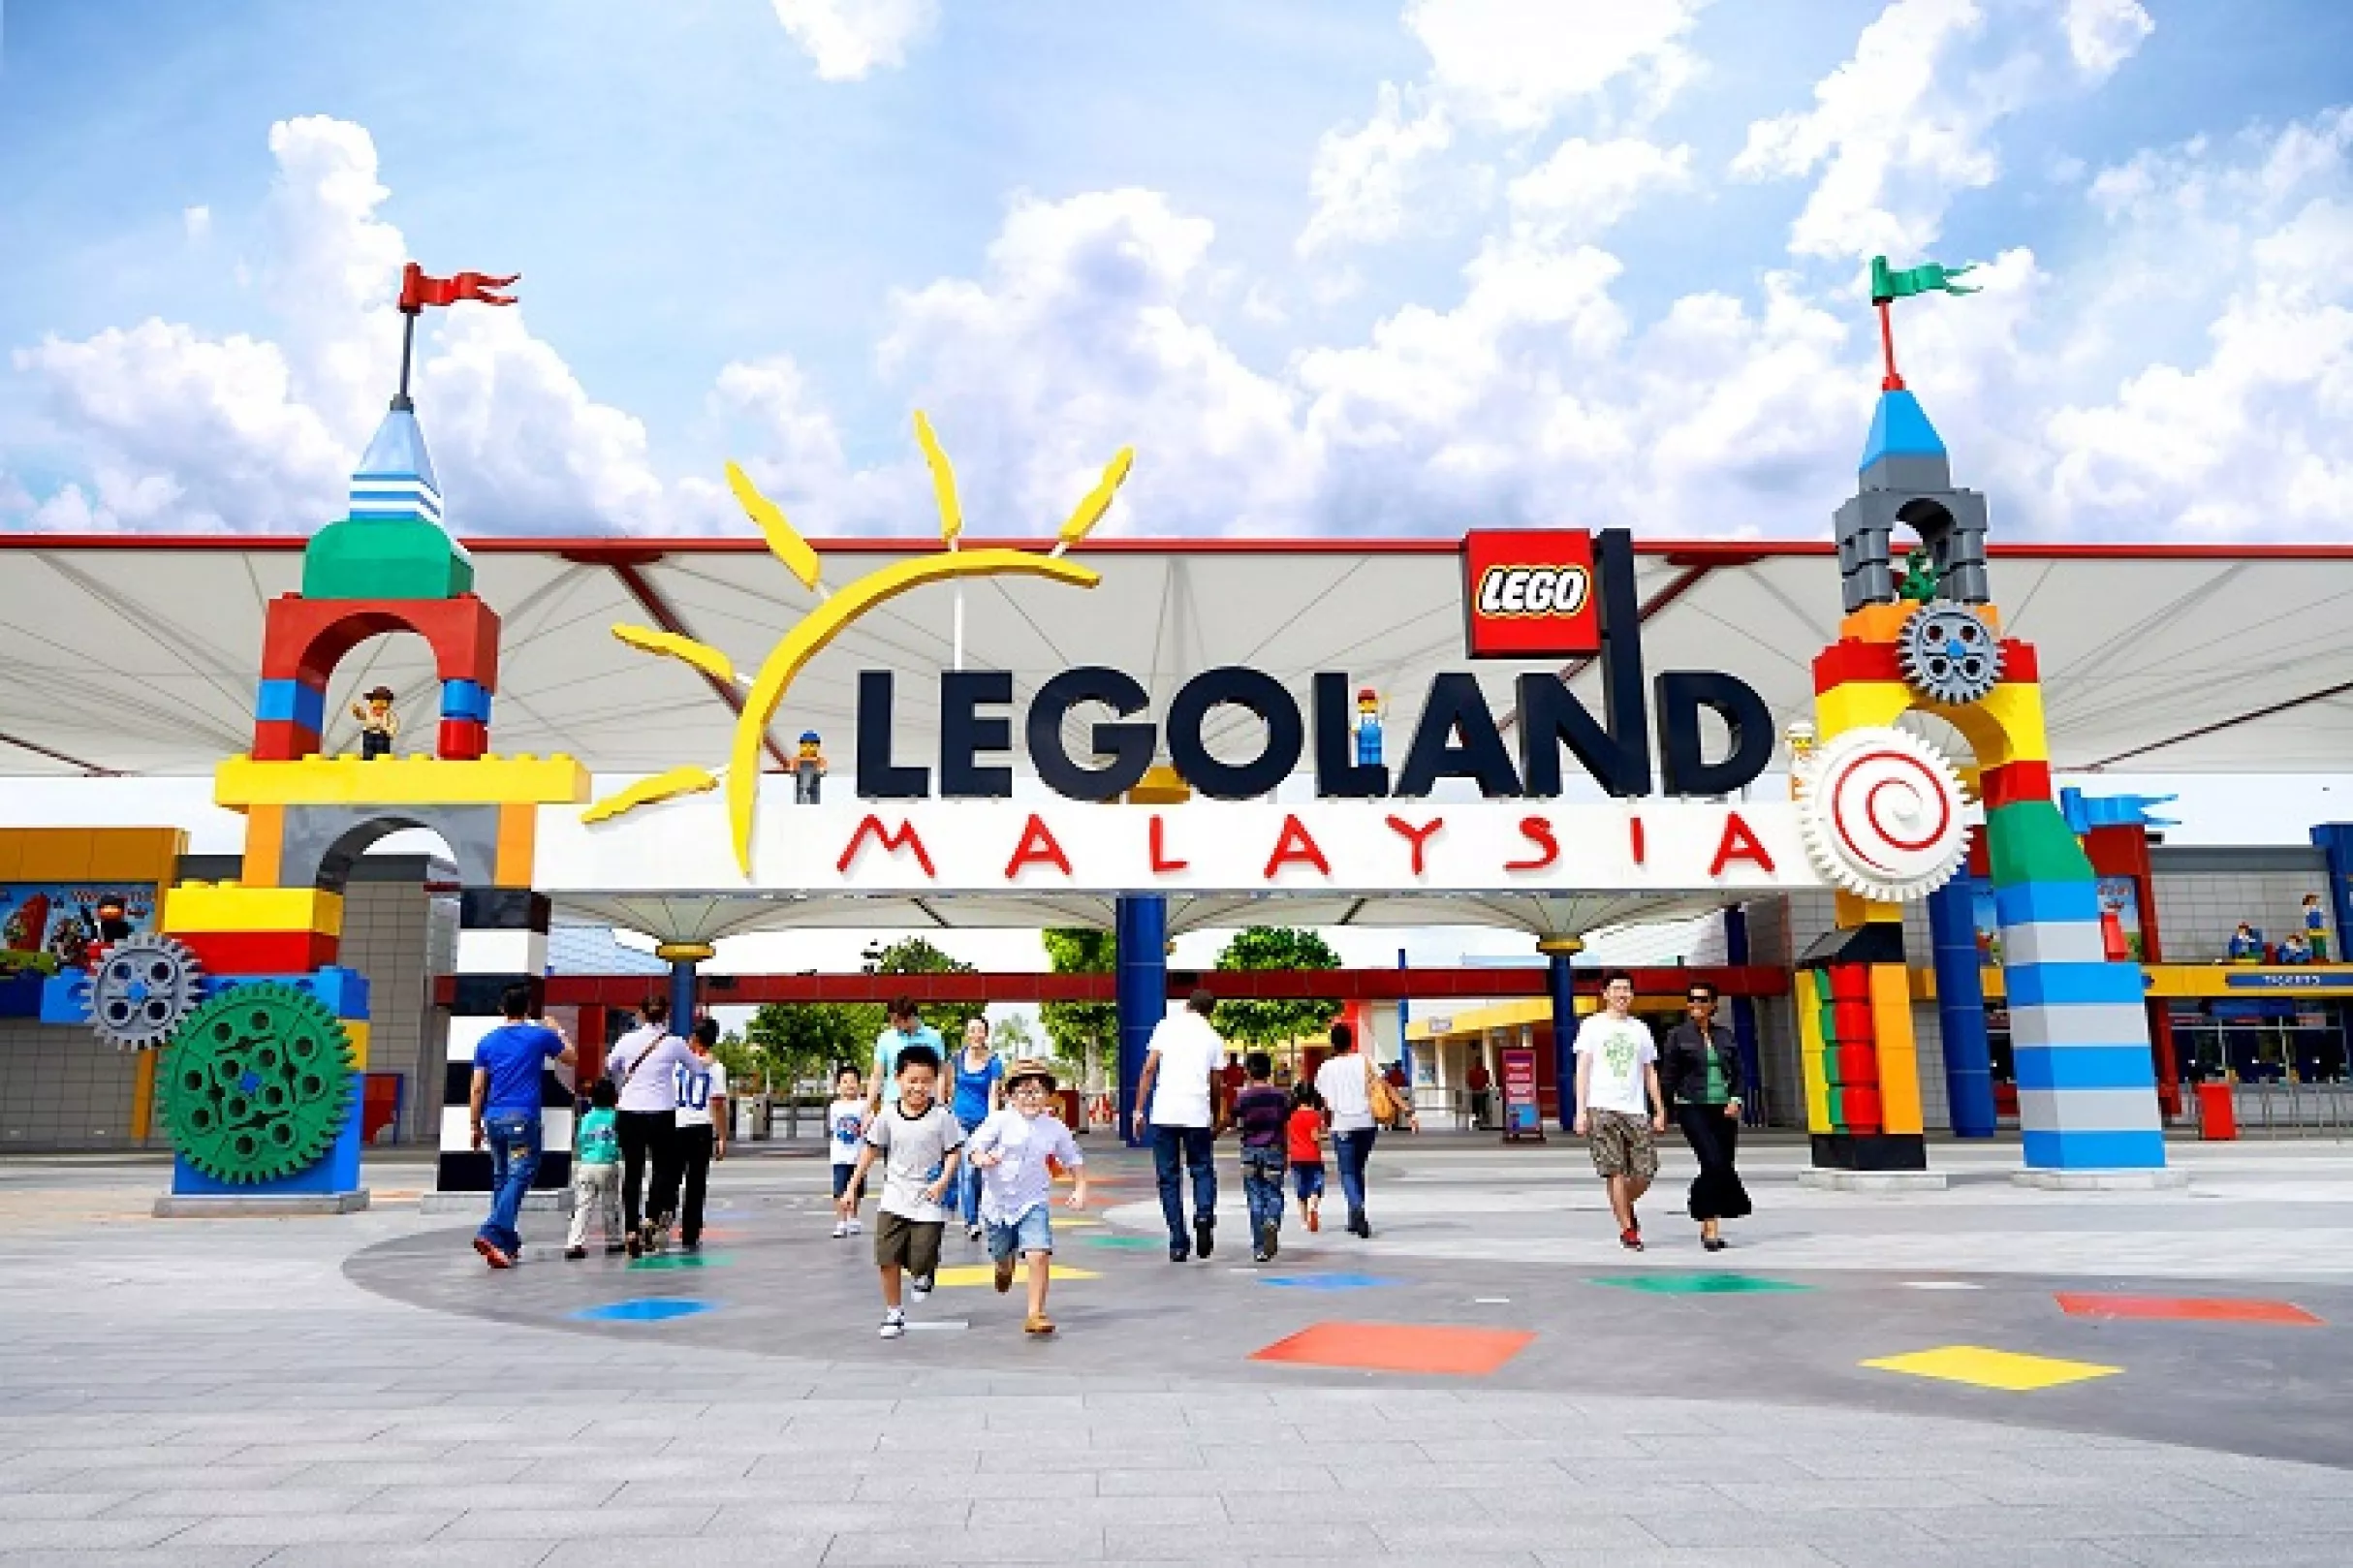 Legoland Malaysia in Malaysia, East Asia | Family Holiday Parks - Rated 3.9